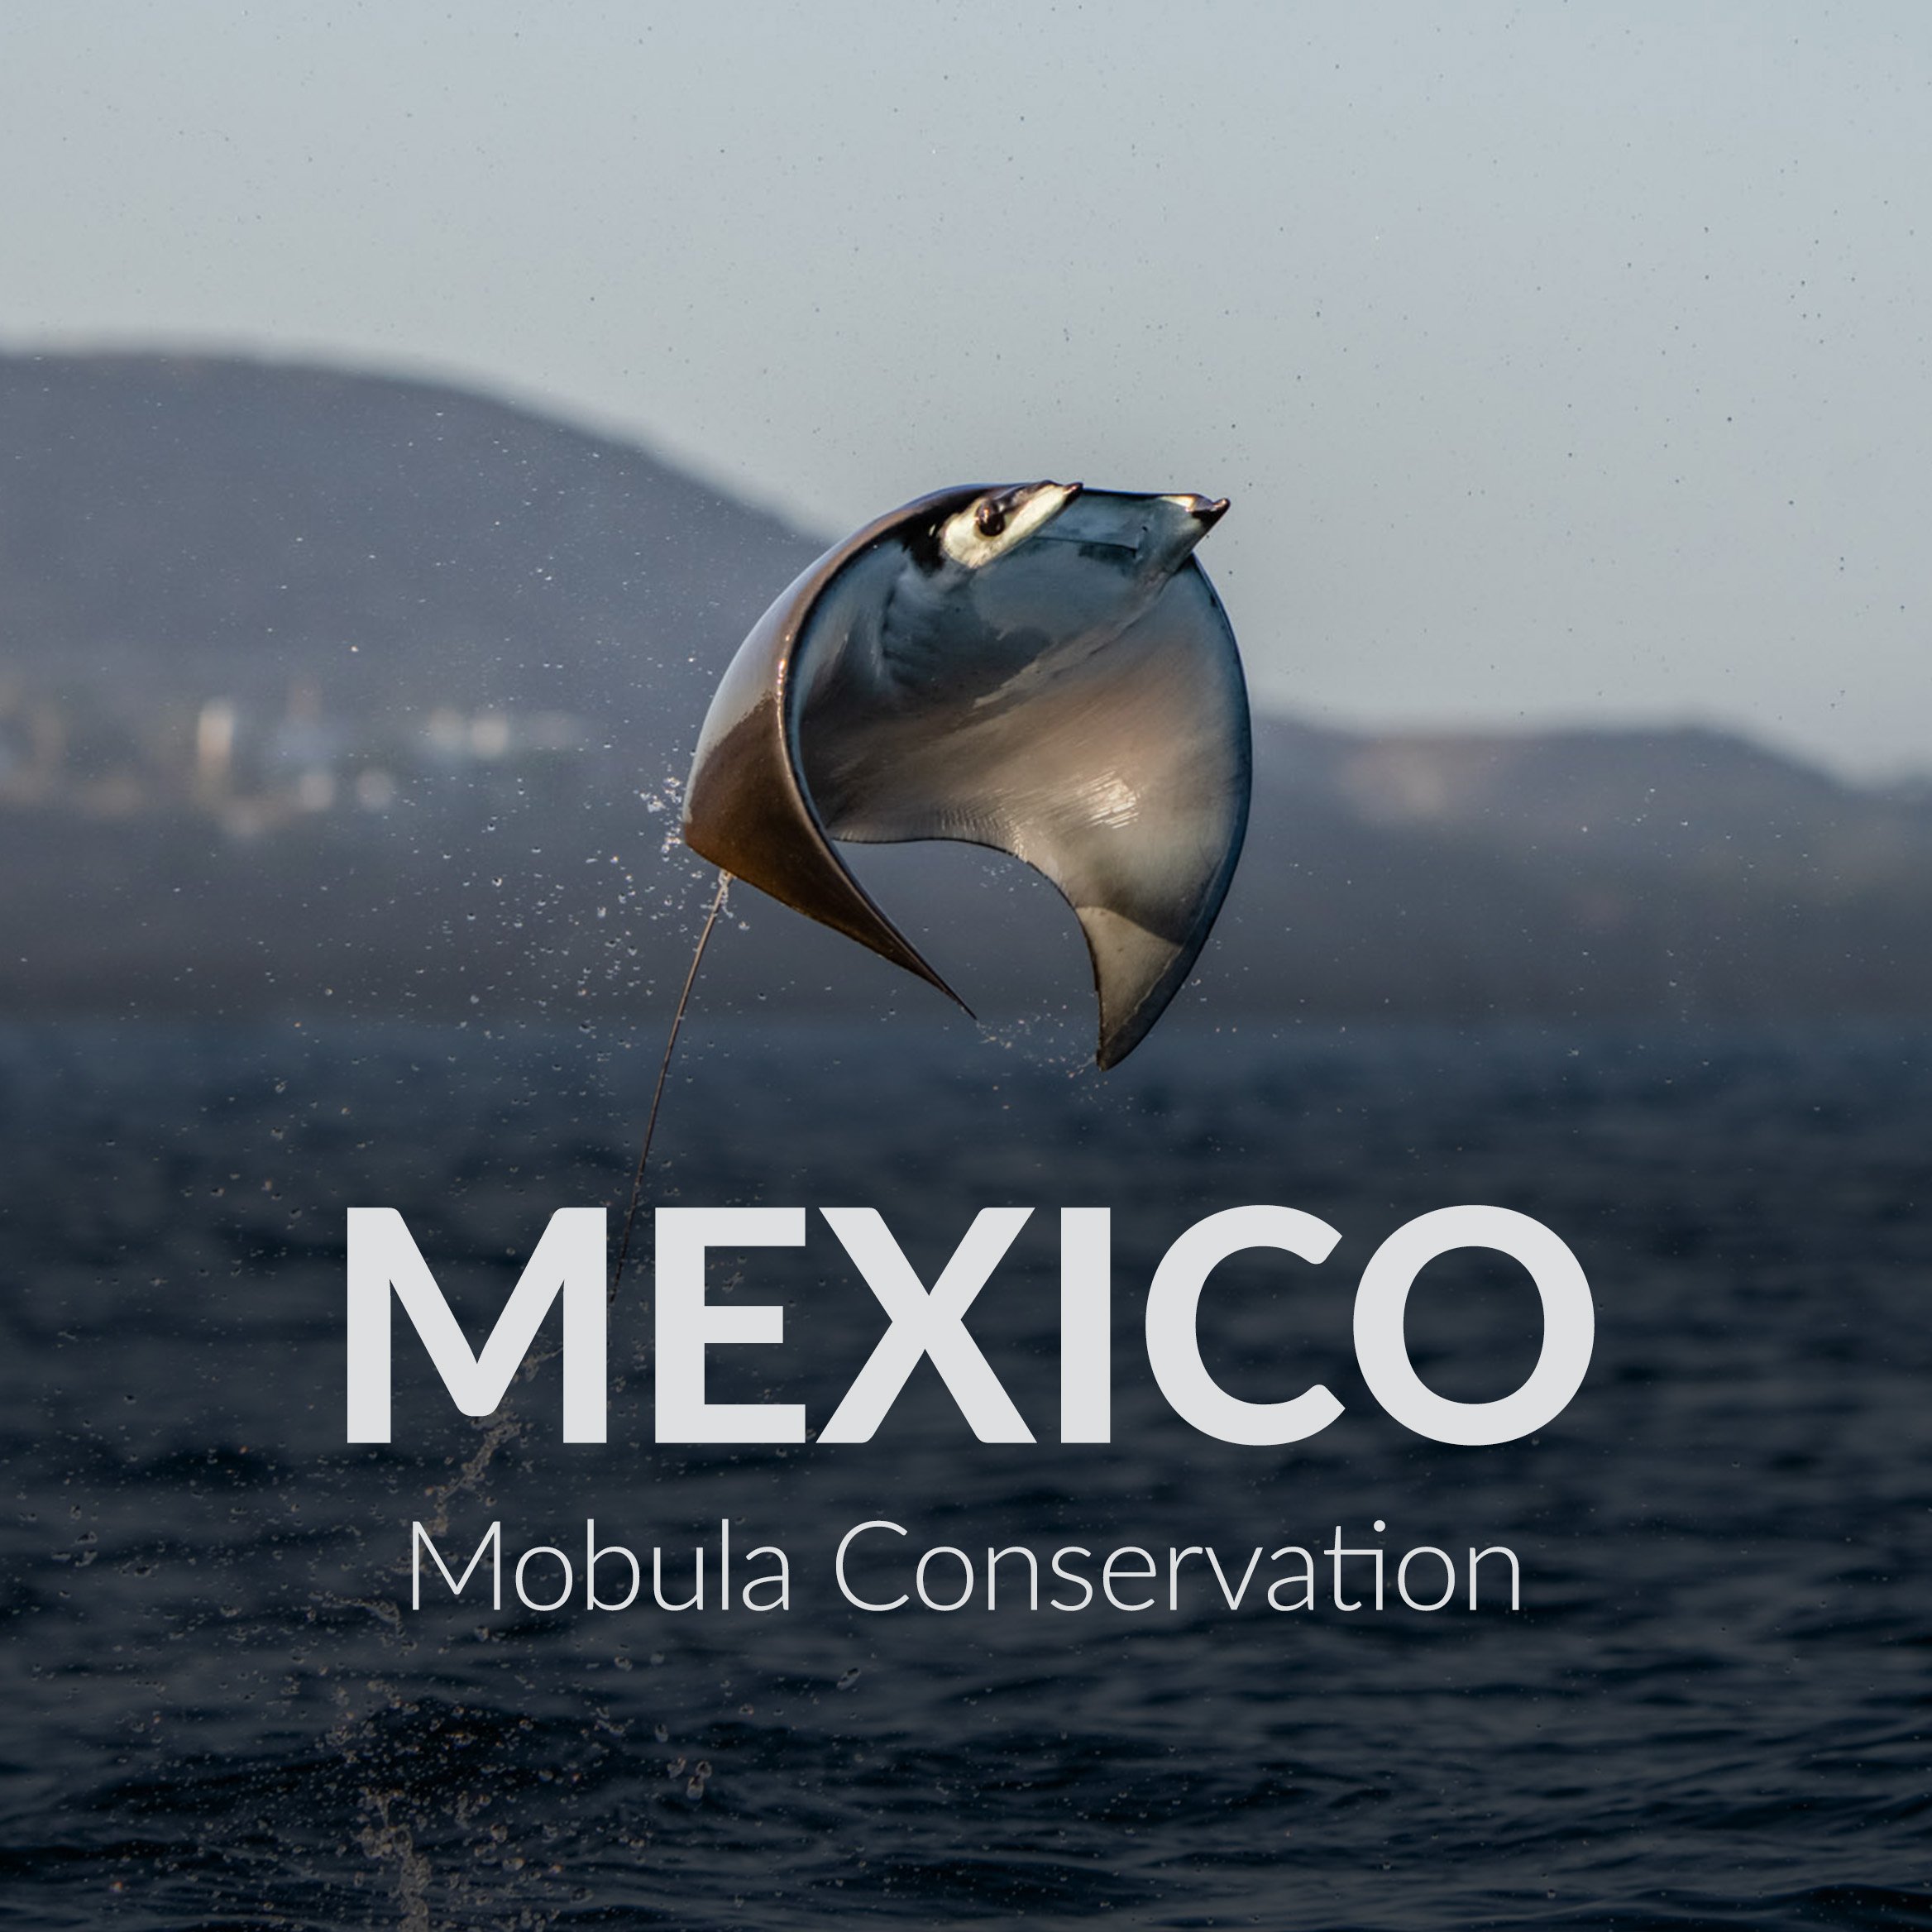 Mexico Mobula Conservation.jpg